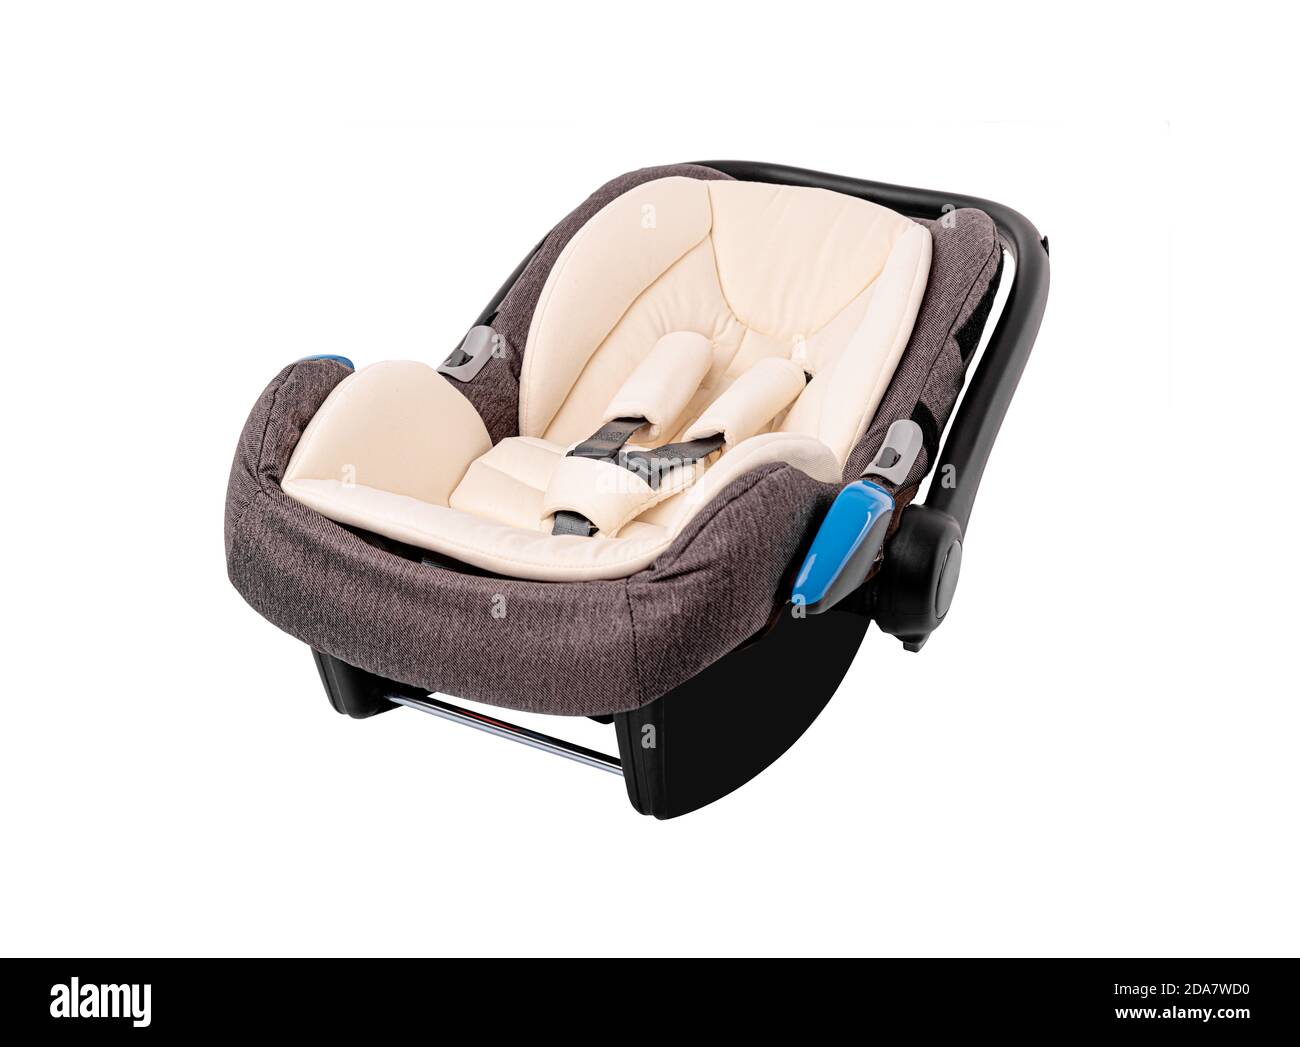 Baby car seat isolated on white background Stock Photo